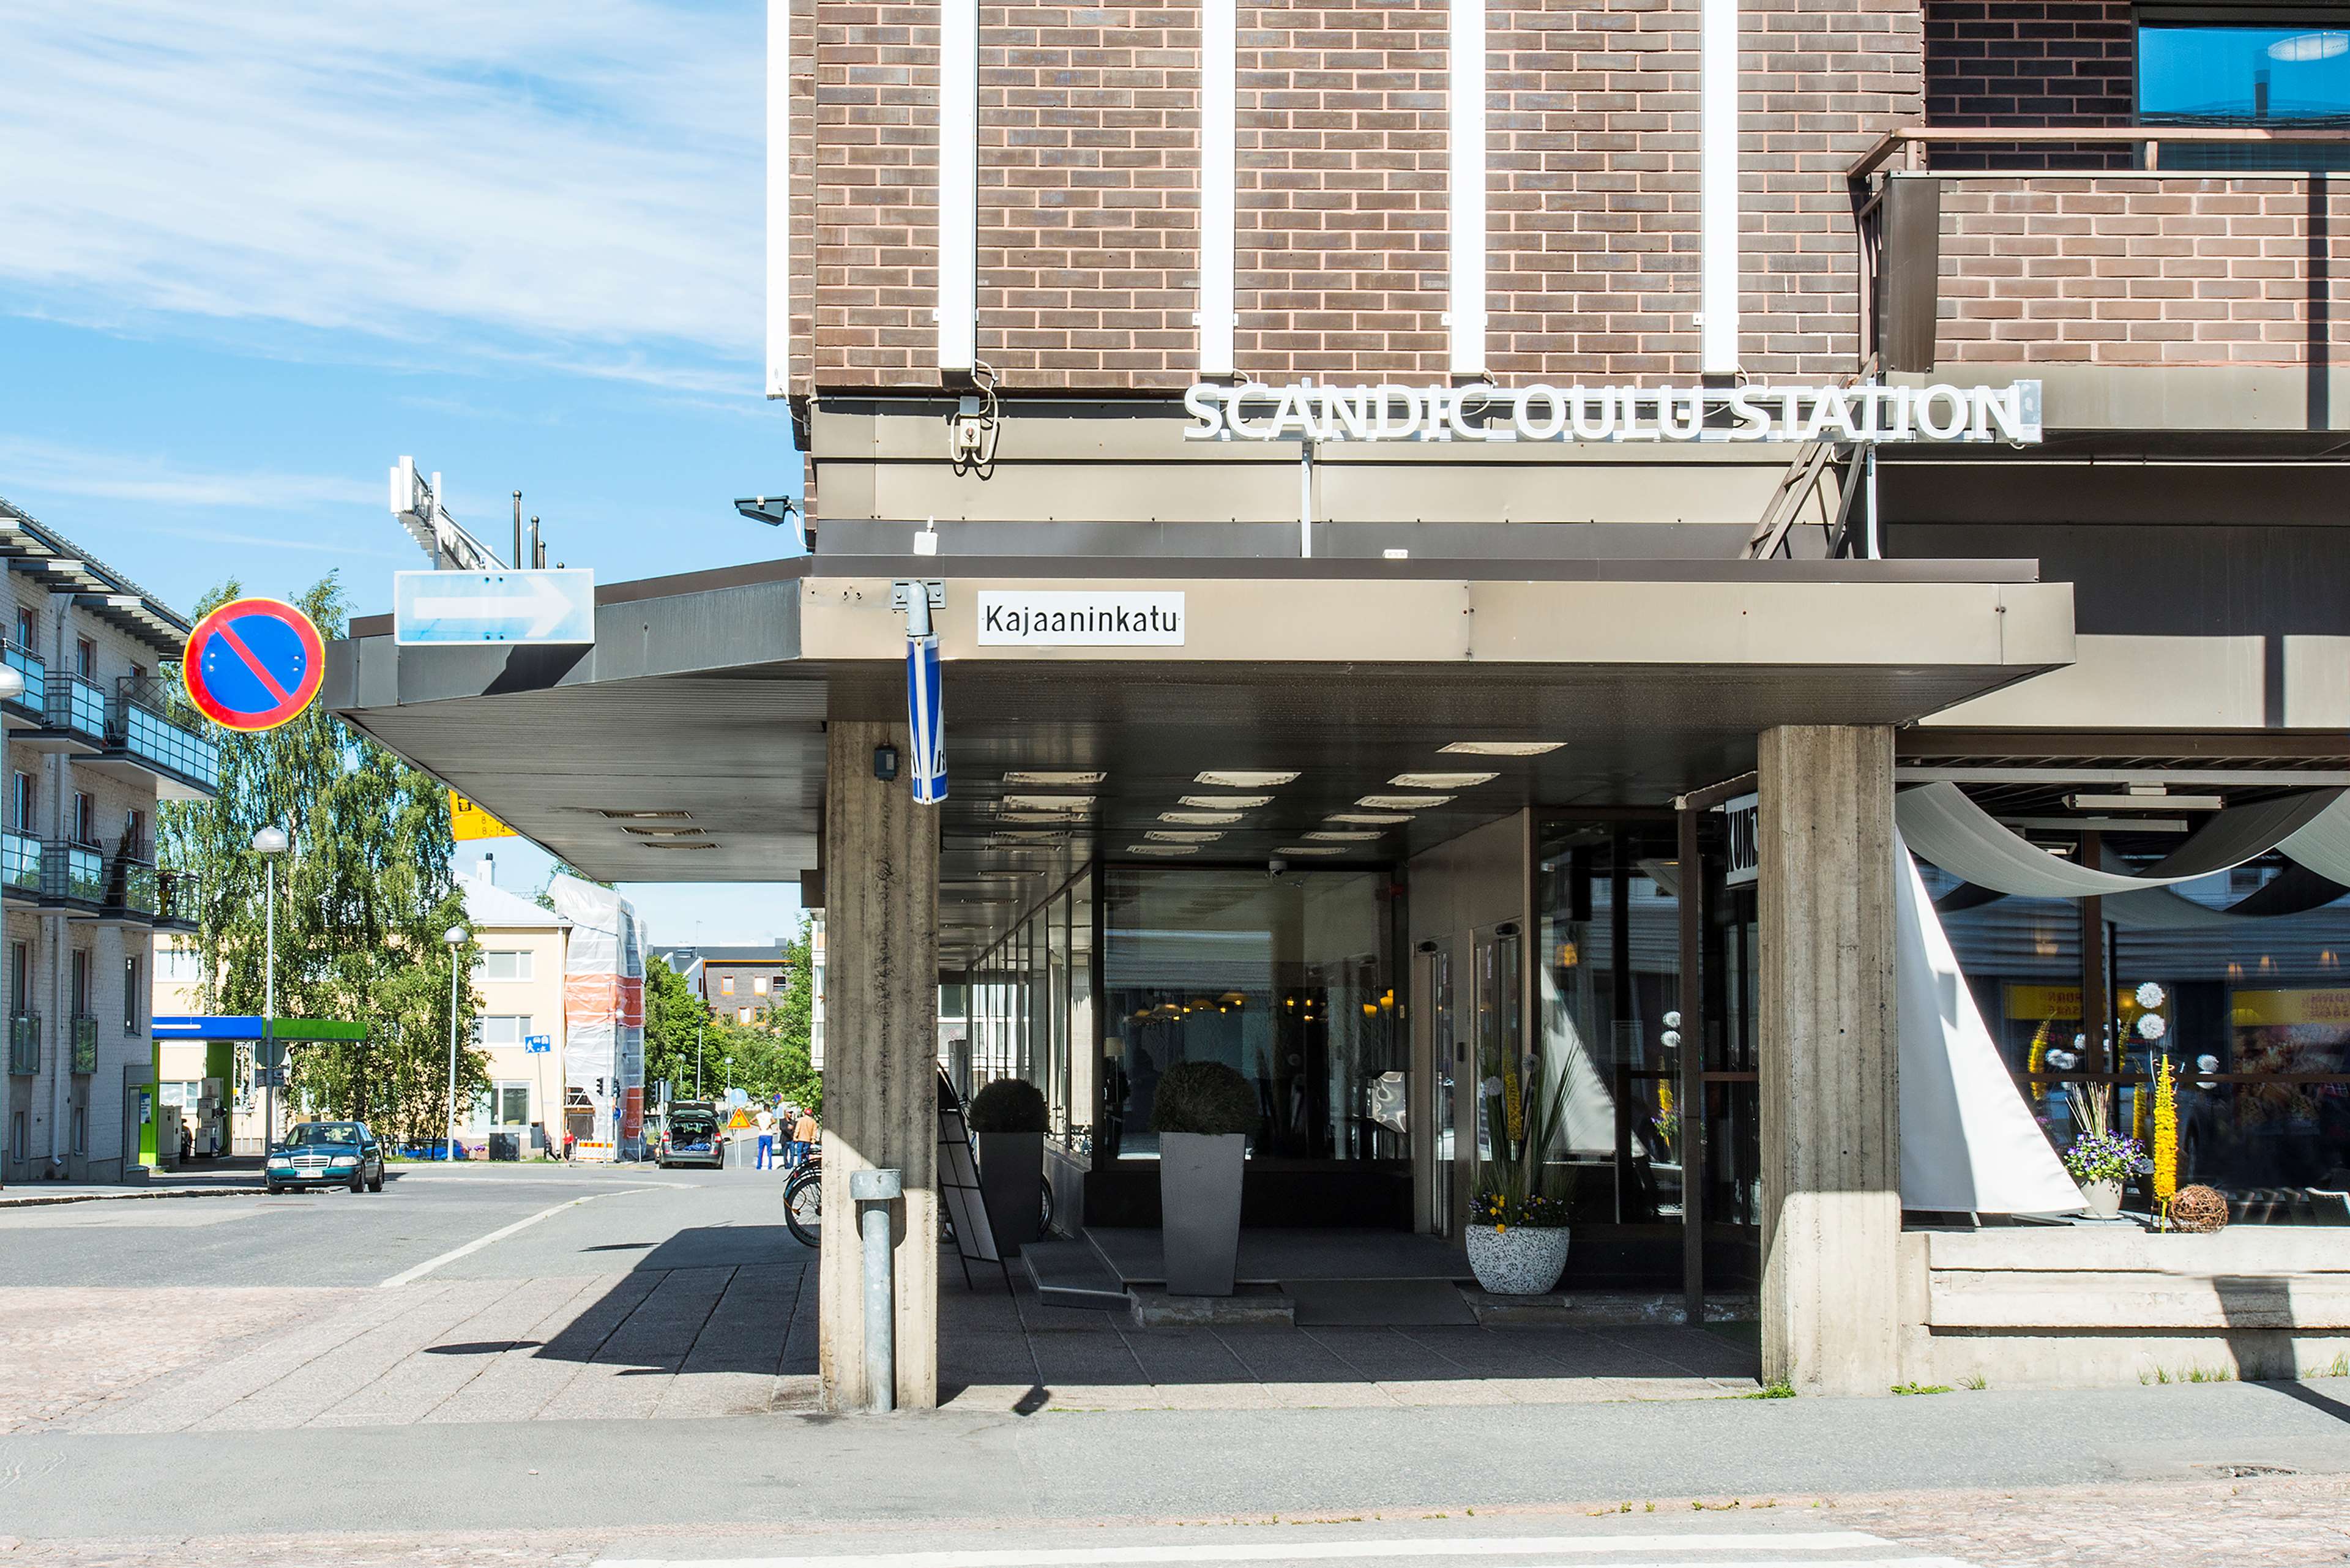 Scandic Oulu Station